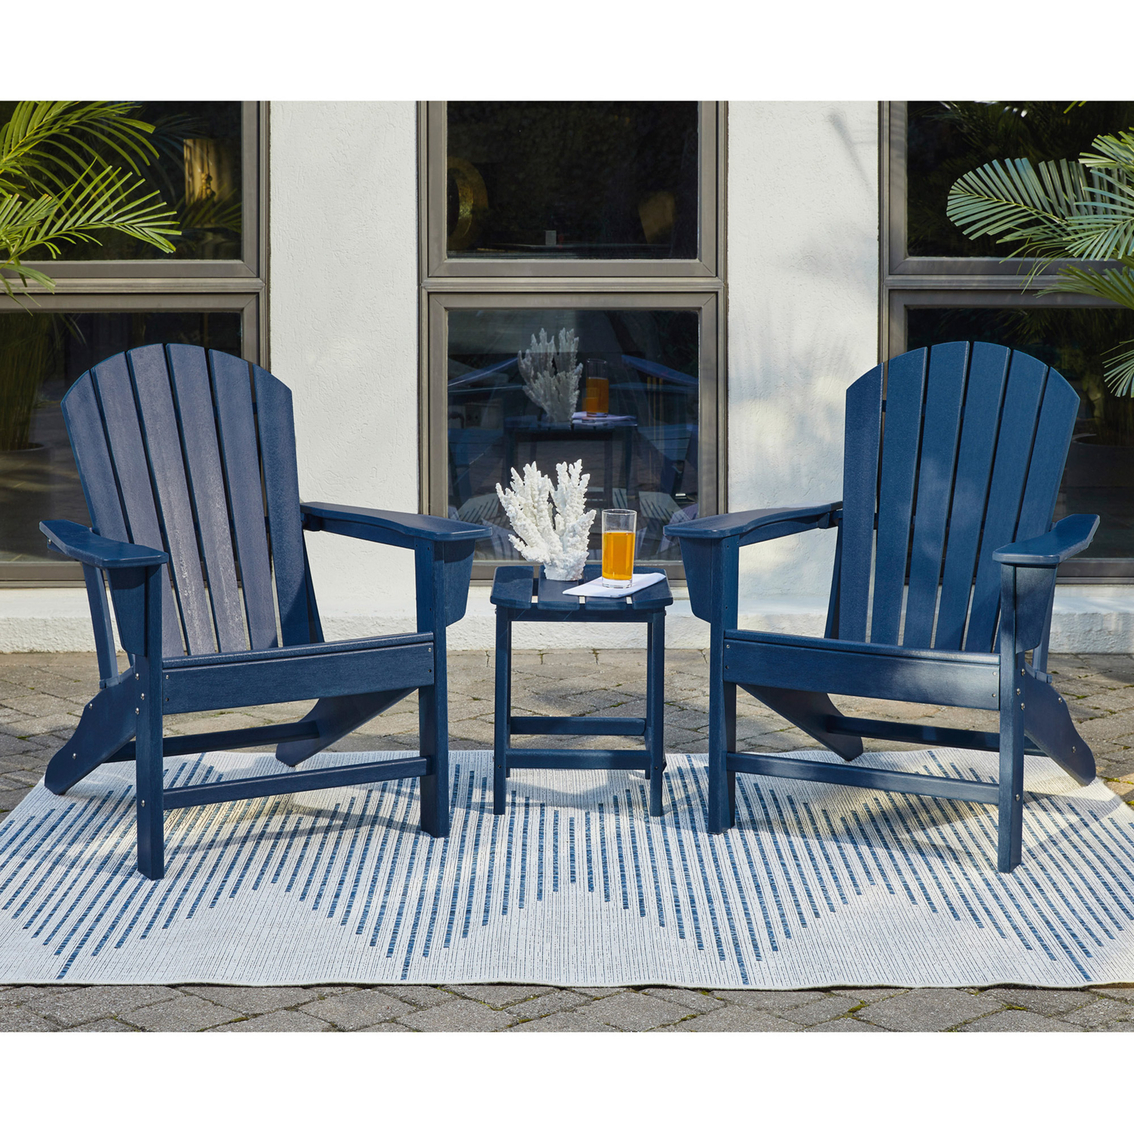 Signature Design by Ashley Sundown Treasure Adirondack Chairs & End Table 3 pc. Set - Image 5 of 7